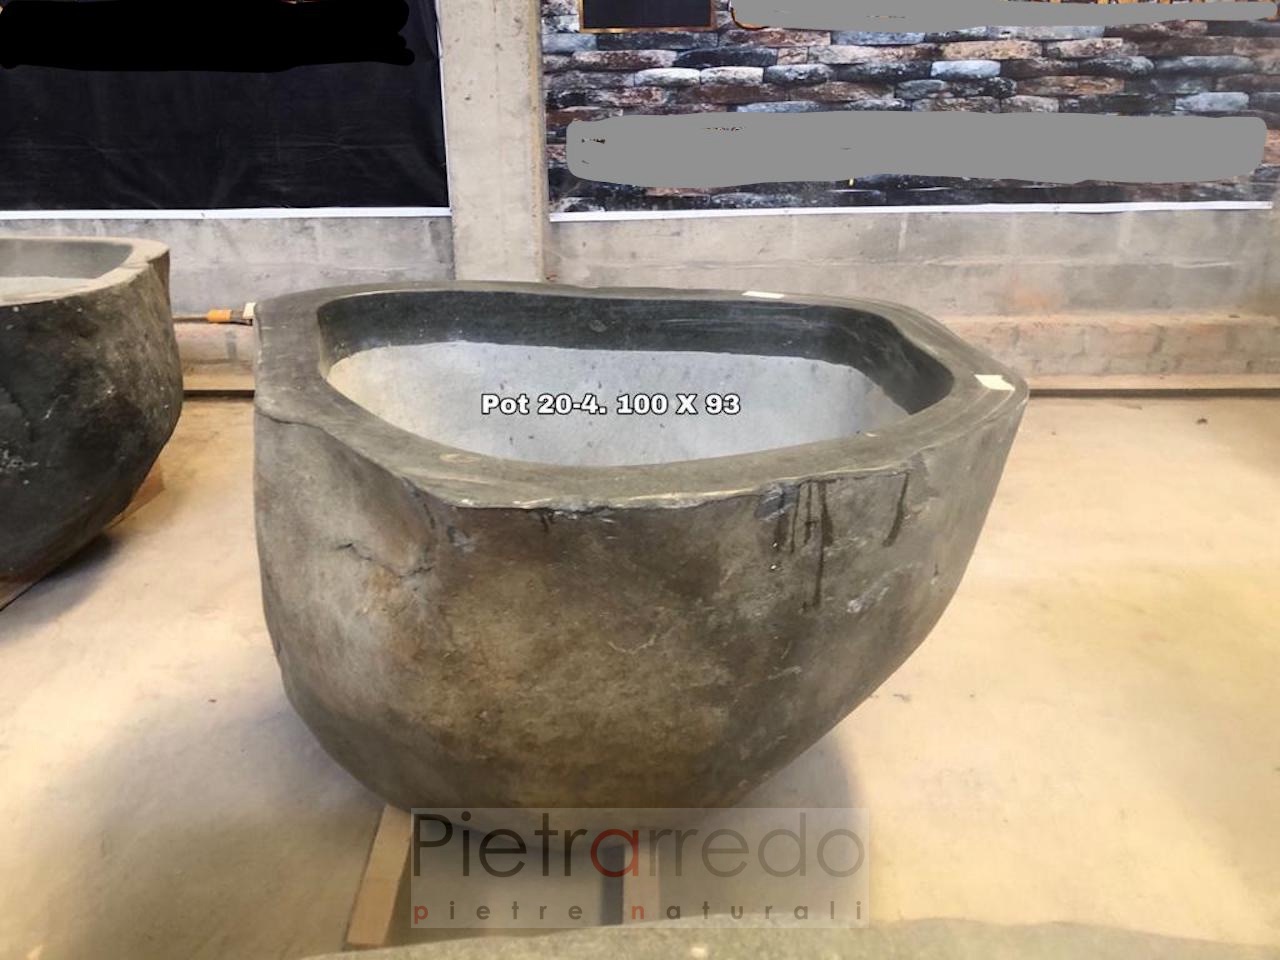 offerta in vendita pietra vaso vasca fioriera in sasso pietrarredo costo